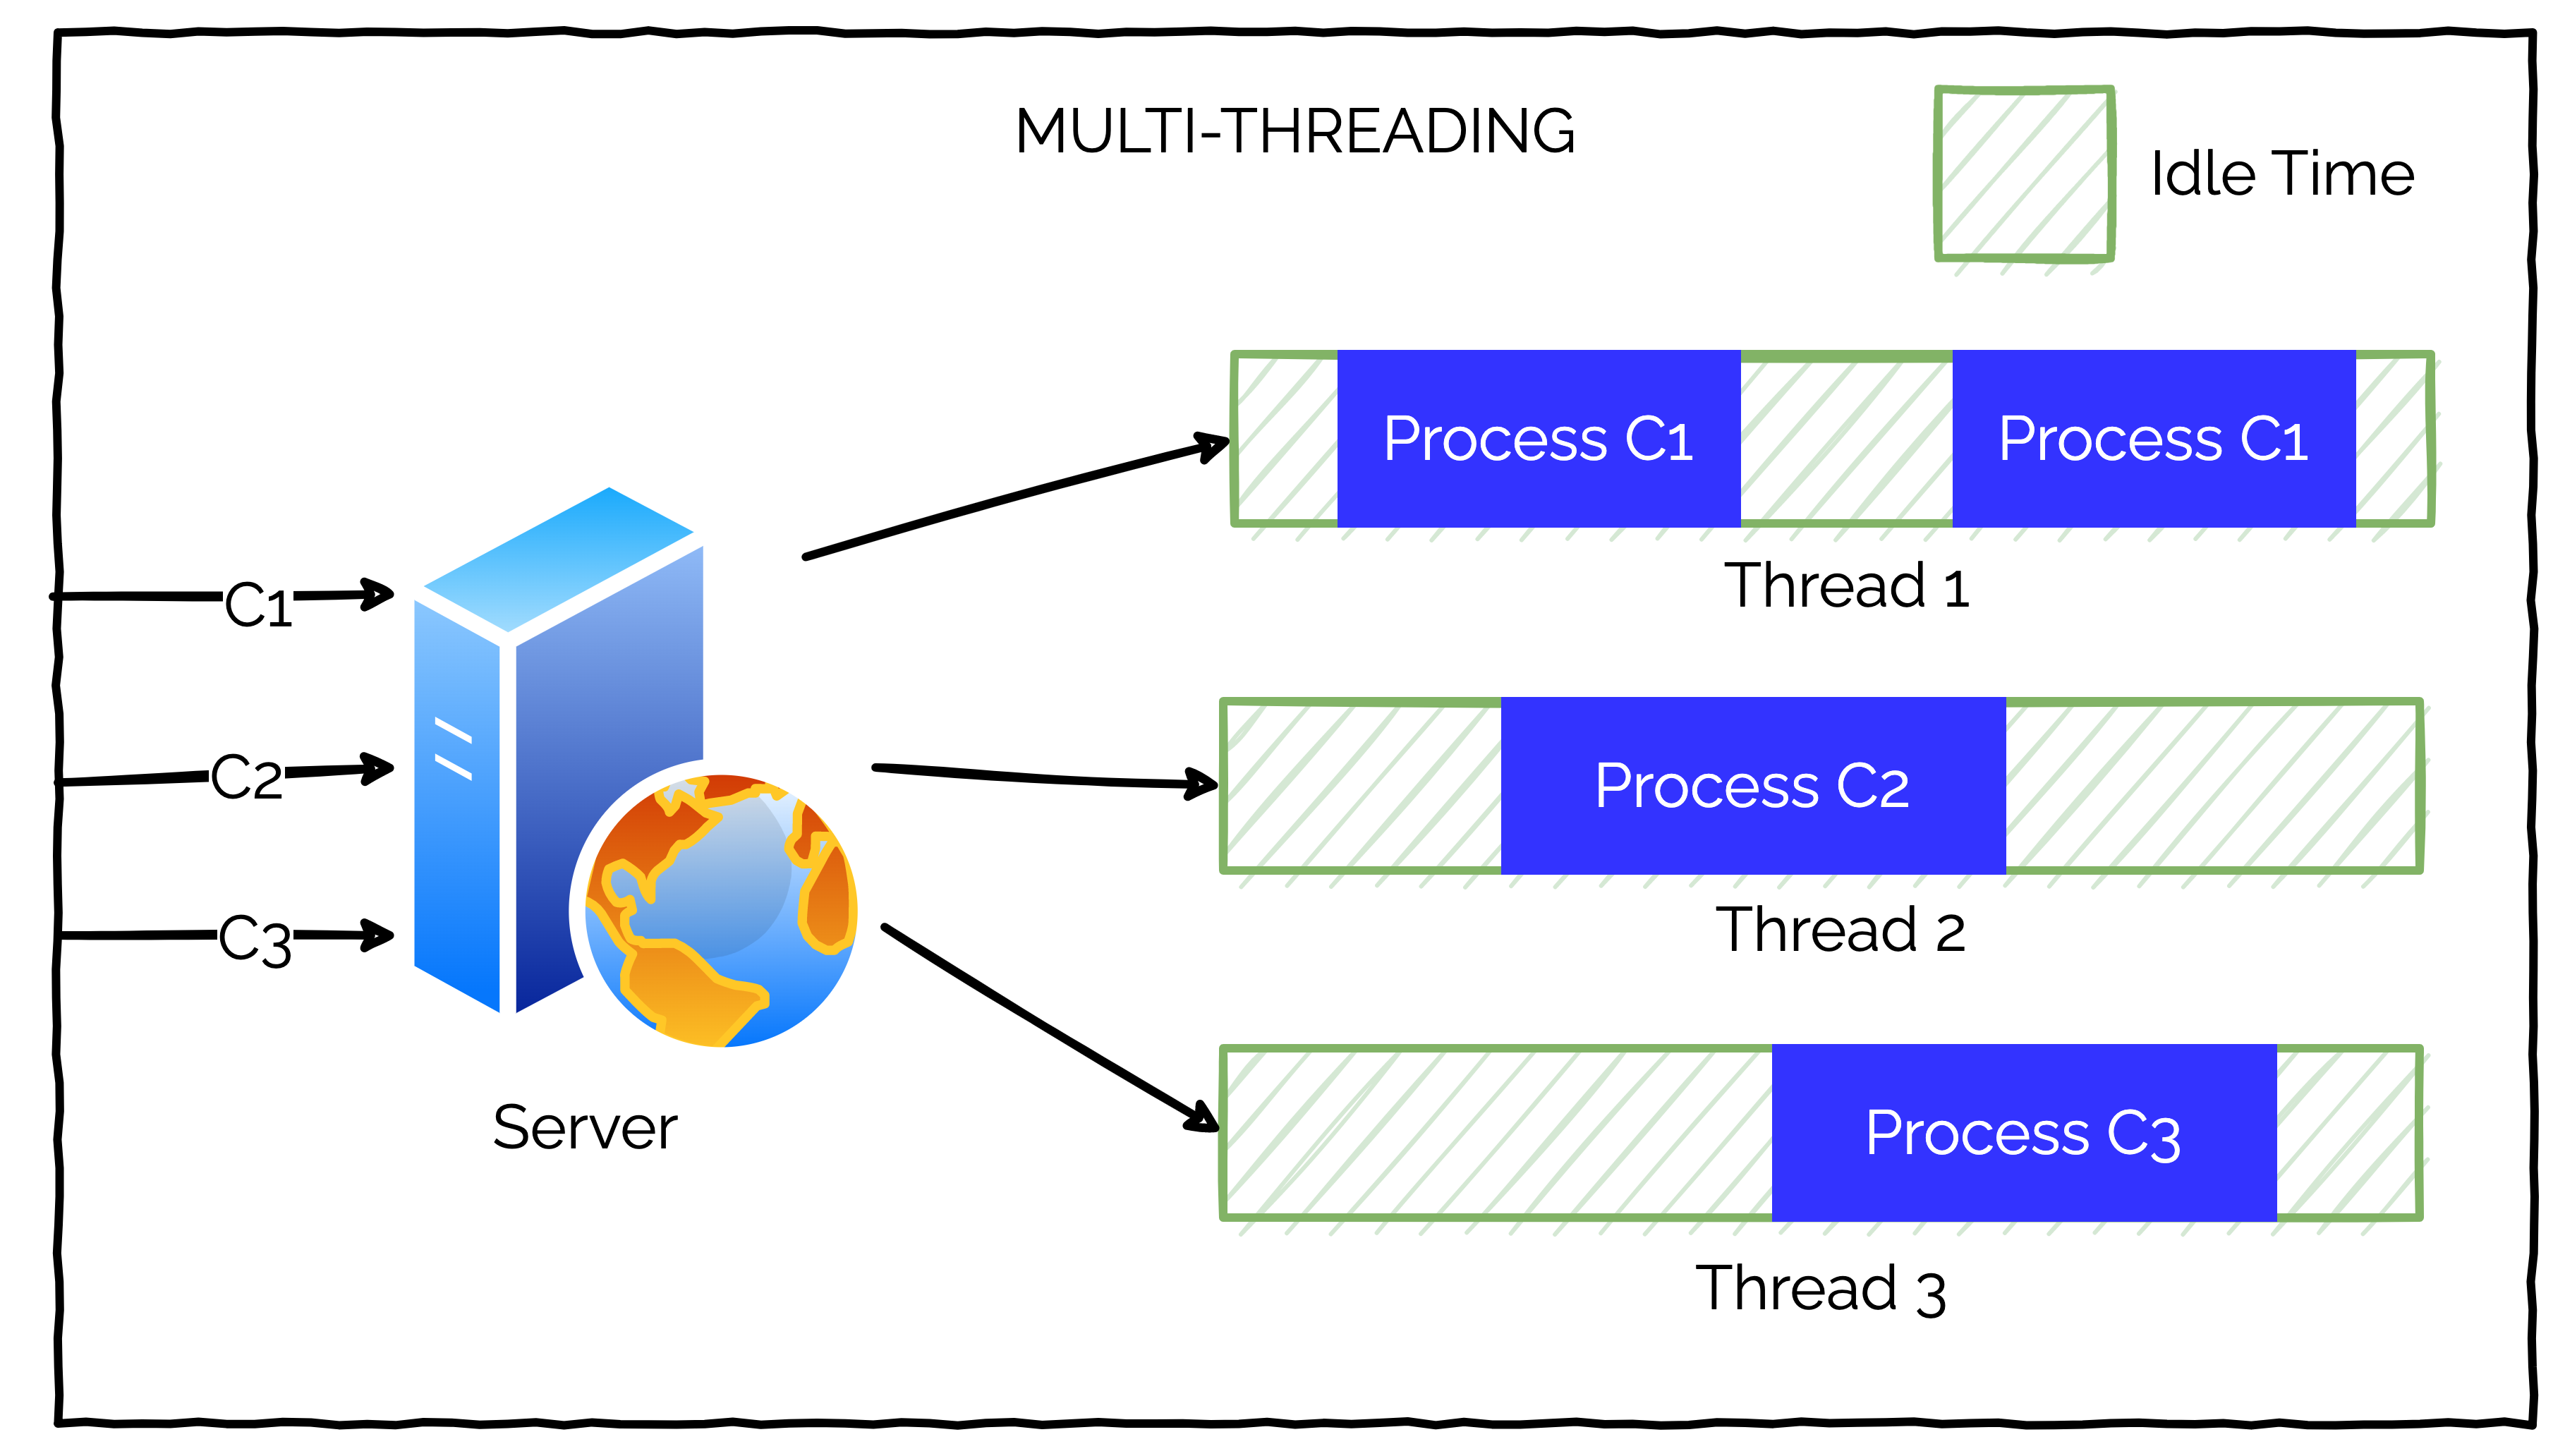 Handling requests using multi-threading